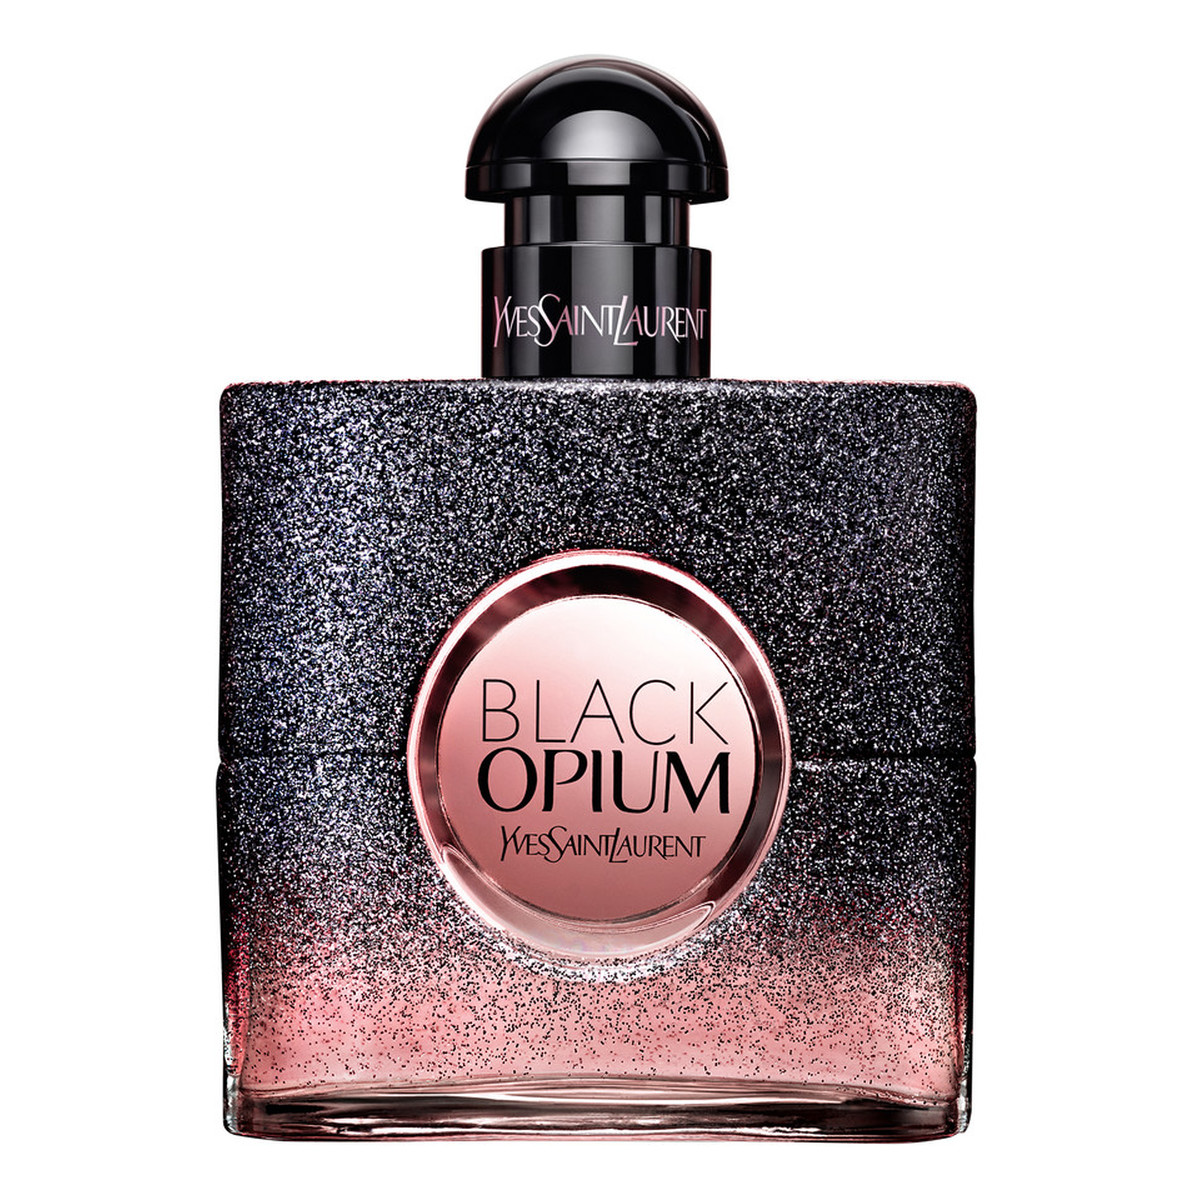 Yves Saint Laurent Black Opium woda perfumowana dla kobiet 30ml